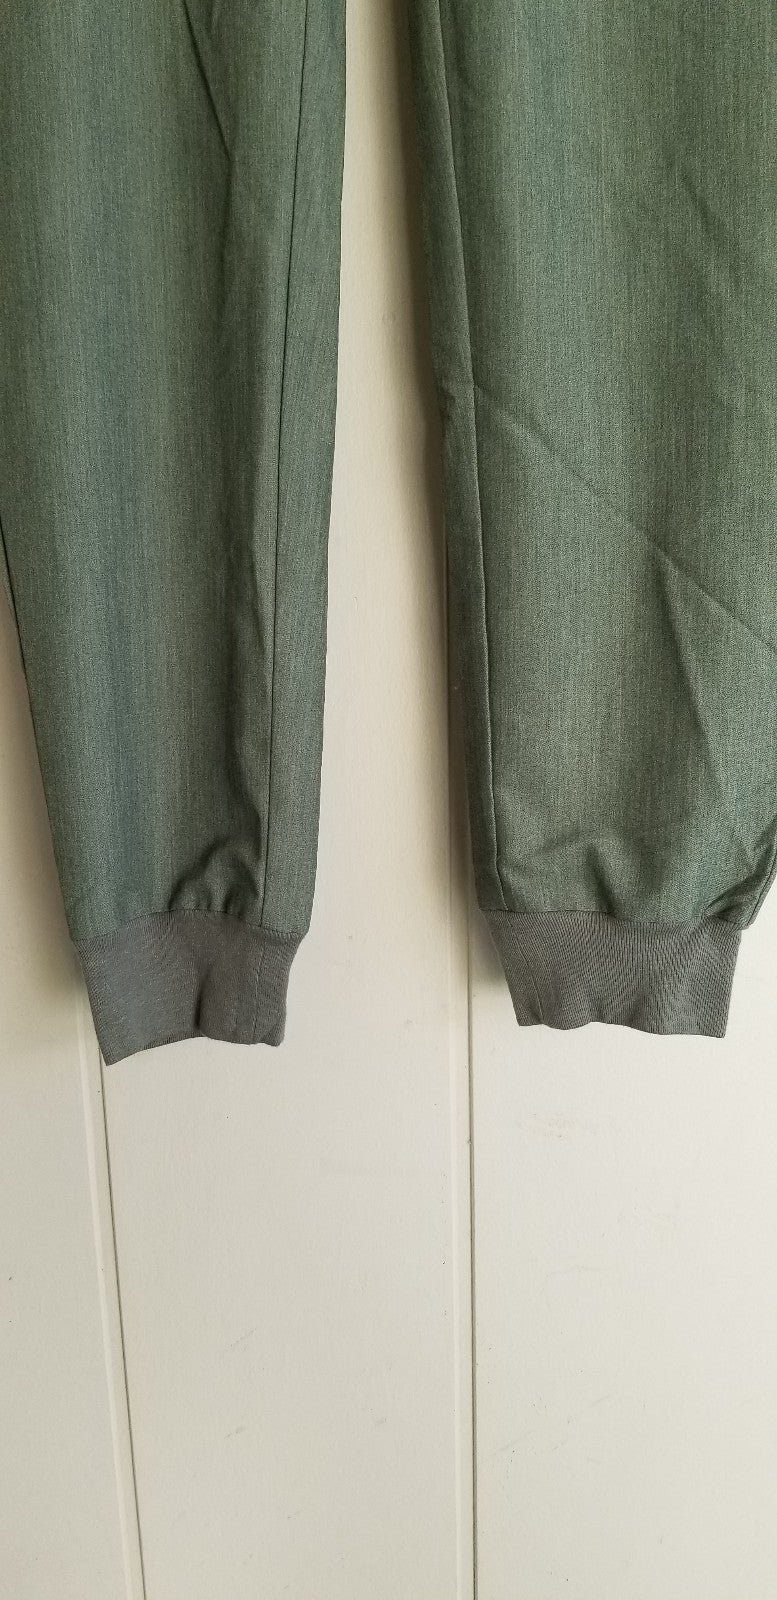 Classic Mandala Scrub Pants Women Size Tall Medium Green Drawstring Pockets n8NkttJpq just for you